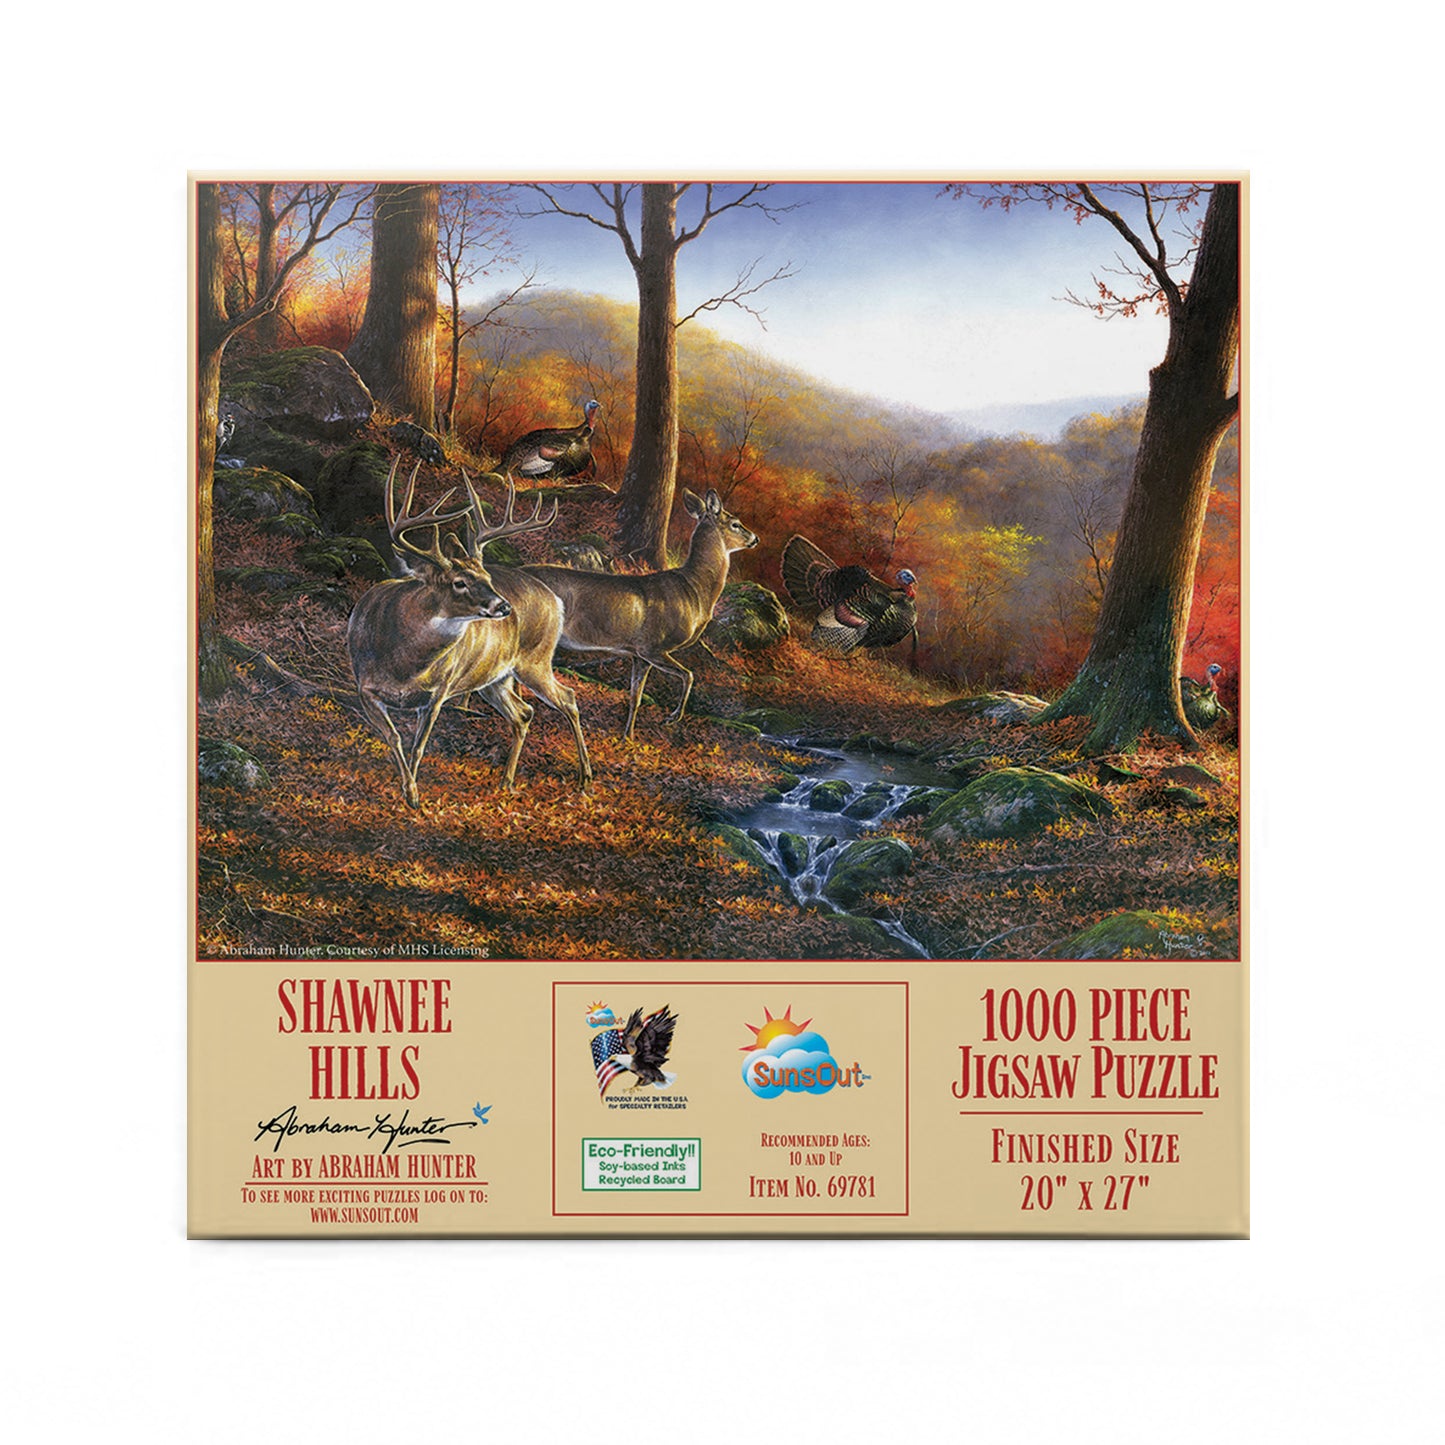 Shawnee Hills - 1000 Piece Jigsaw Puzzle